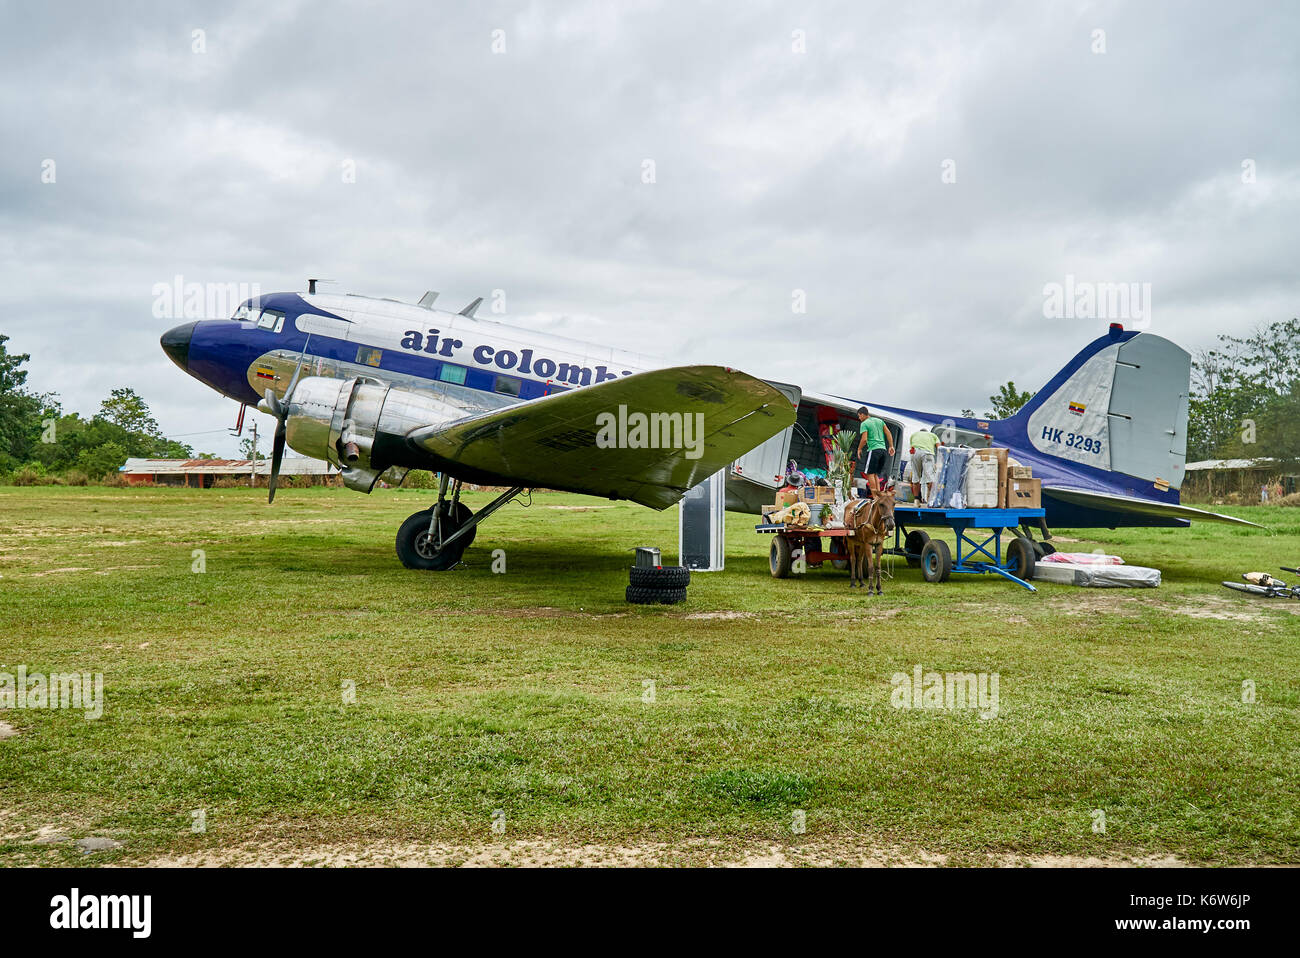 old Douglas DC-3 propeller plane loaded from donkey carriage , Serrania de la Macarena, La Macarena, Colombia, South America Stock Photo